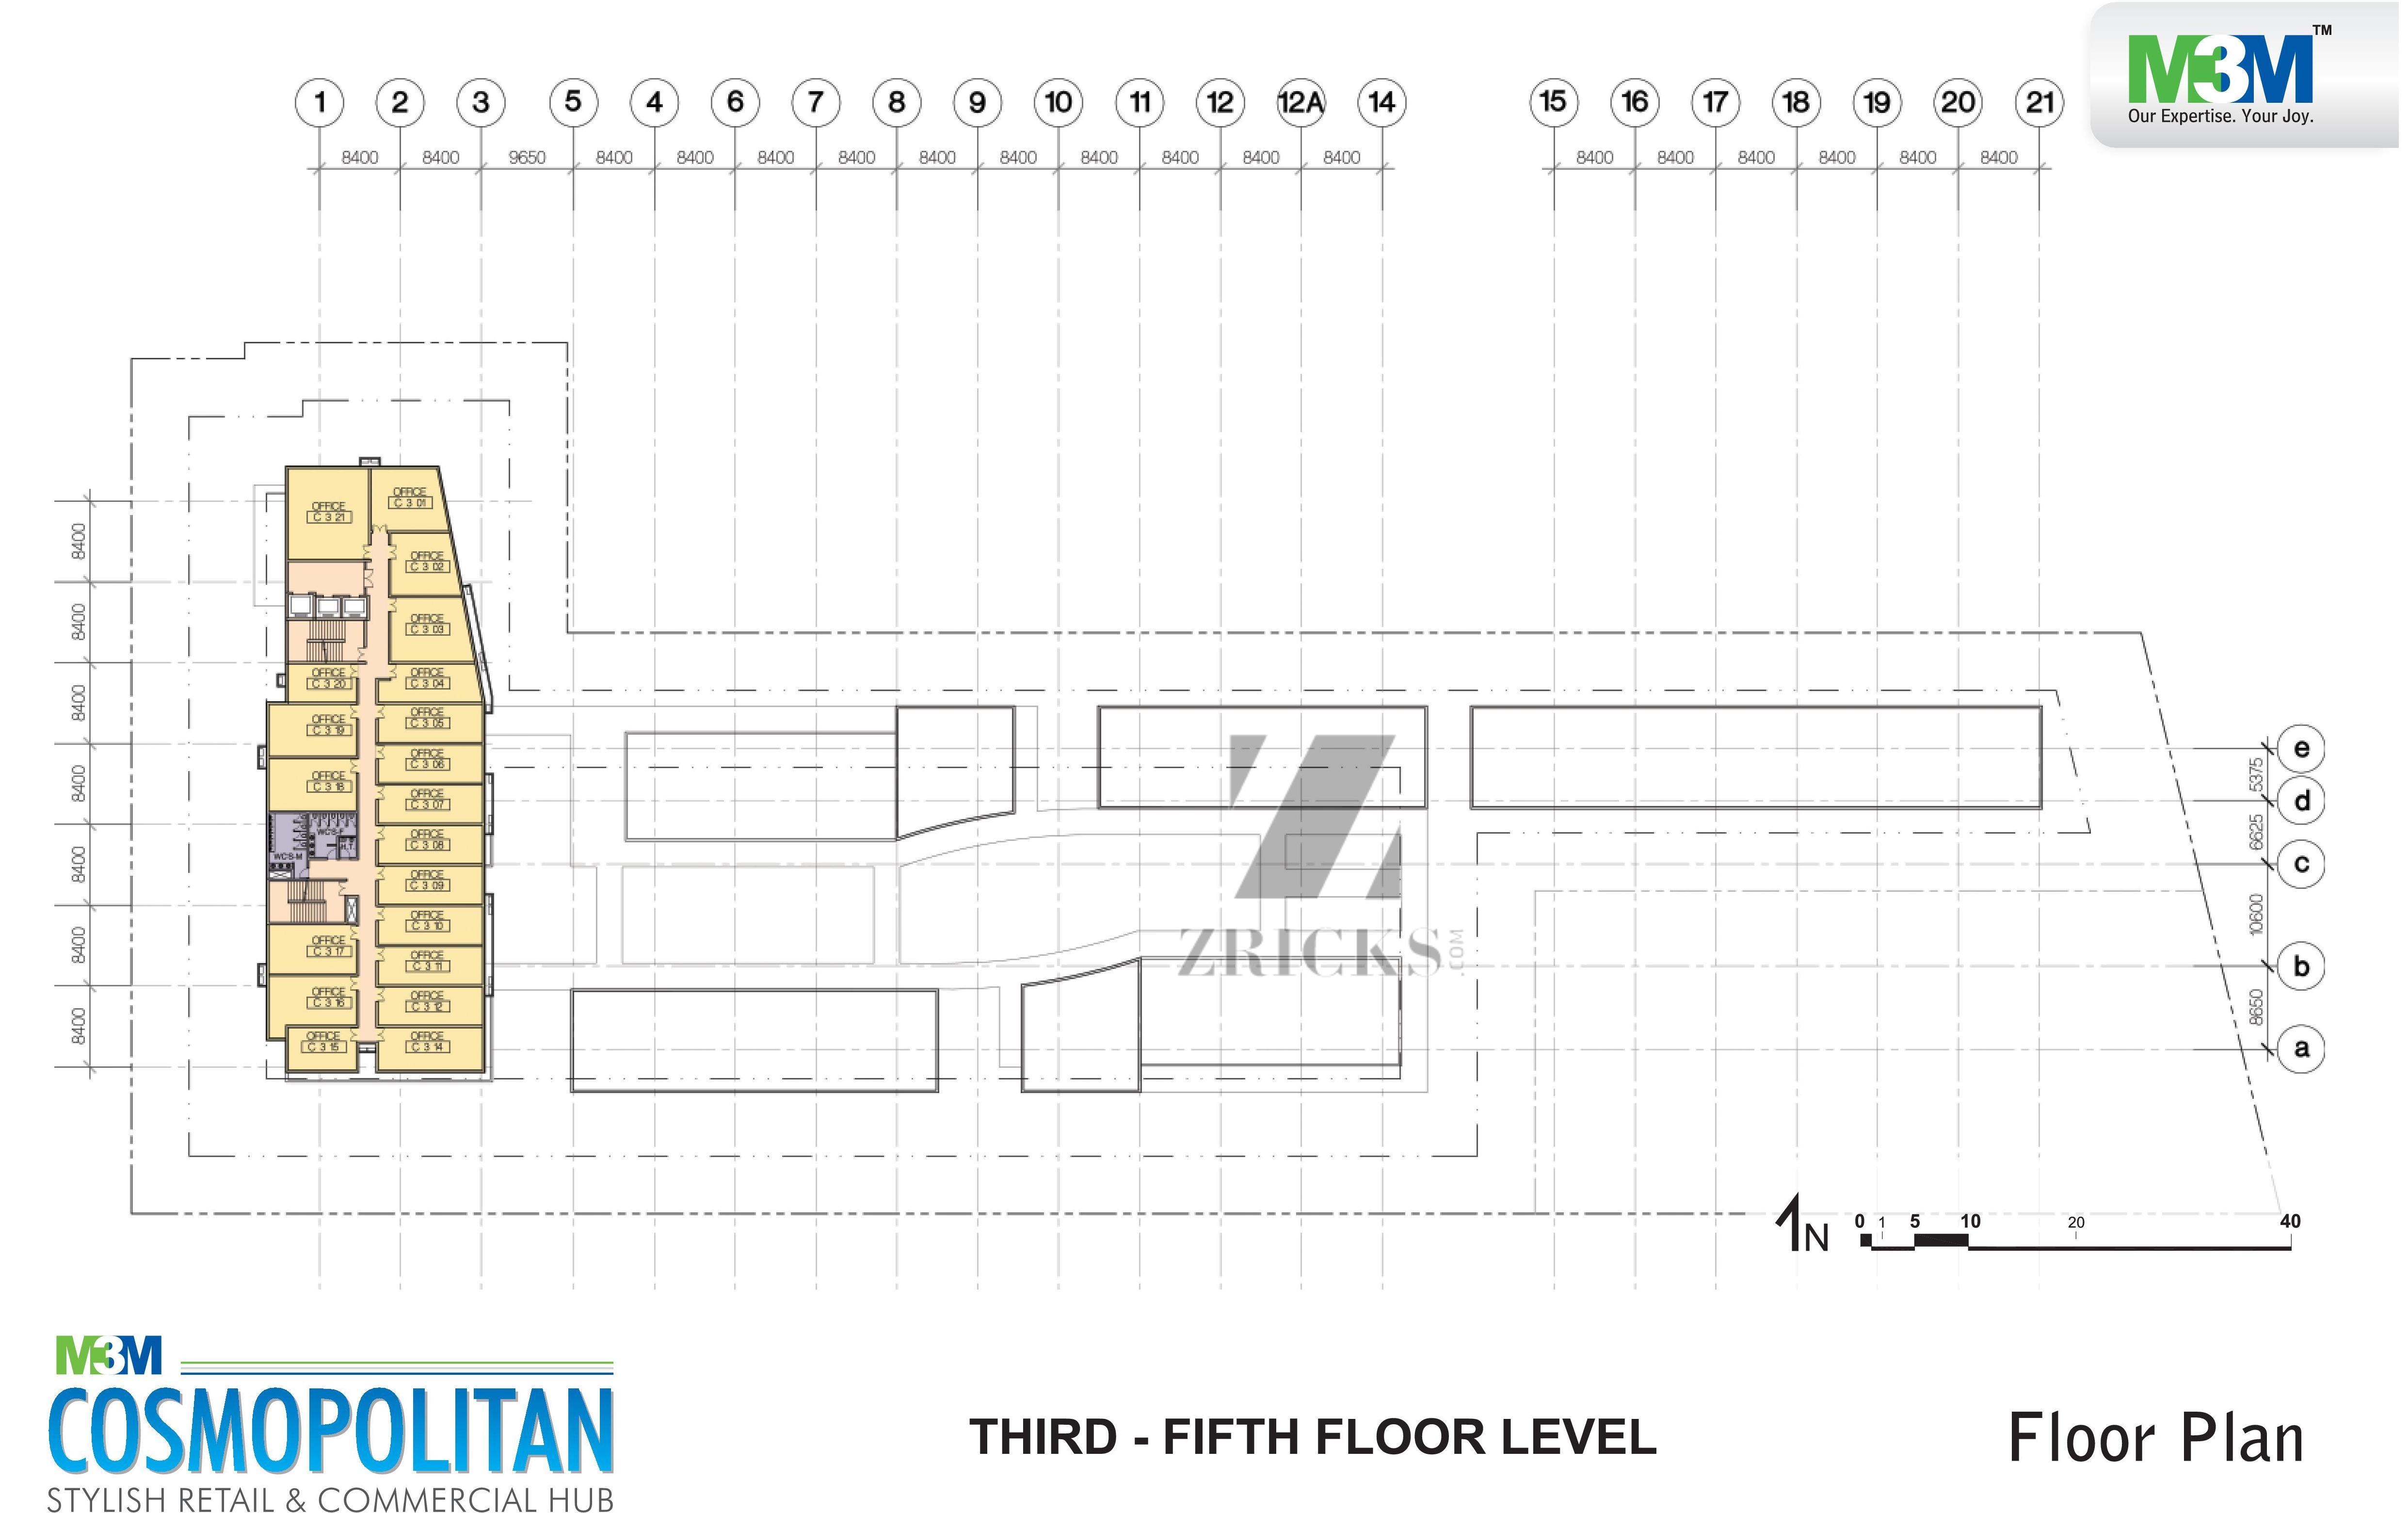 M3M Cosmopolitan Floor Plan